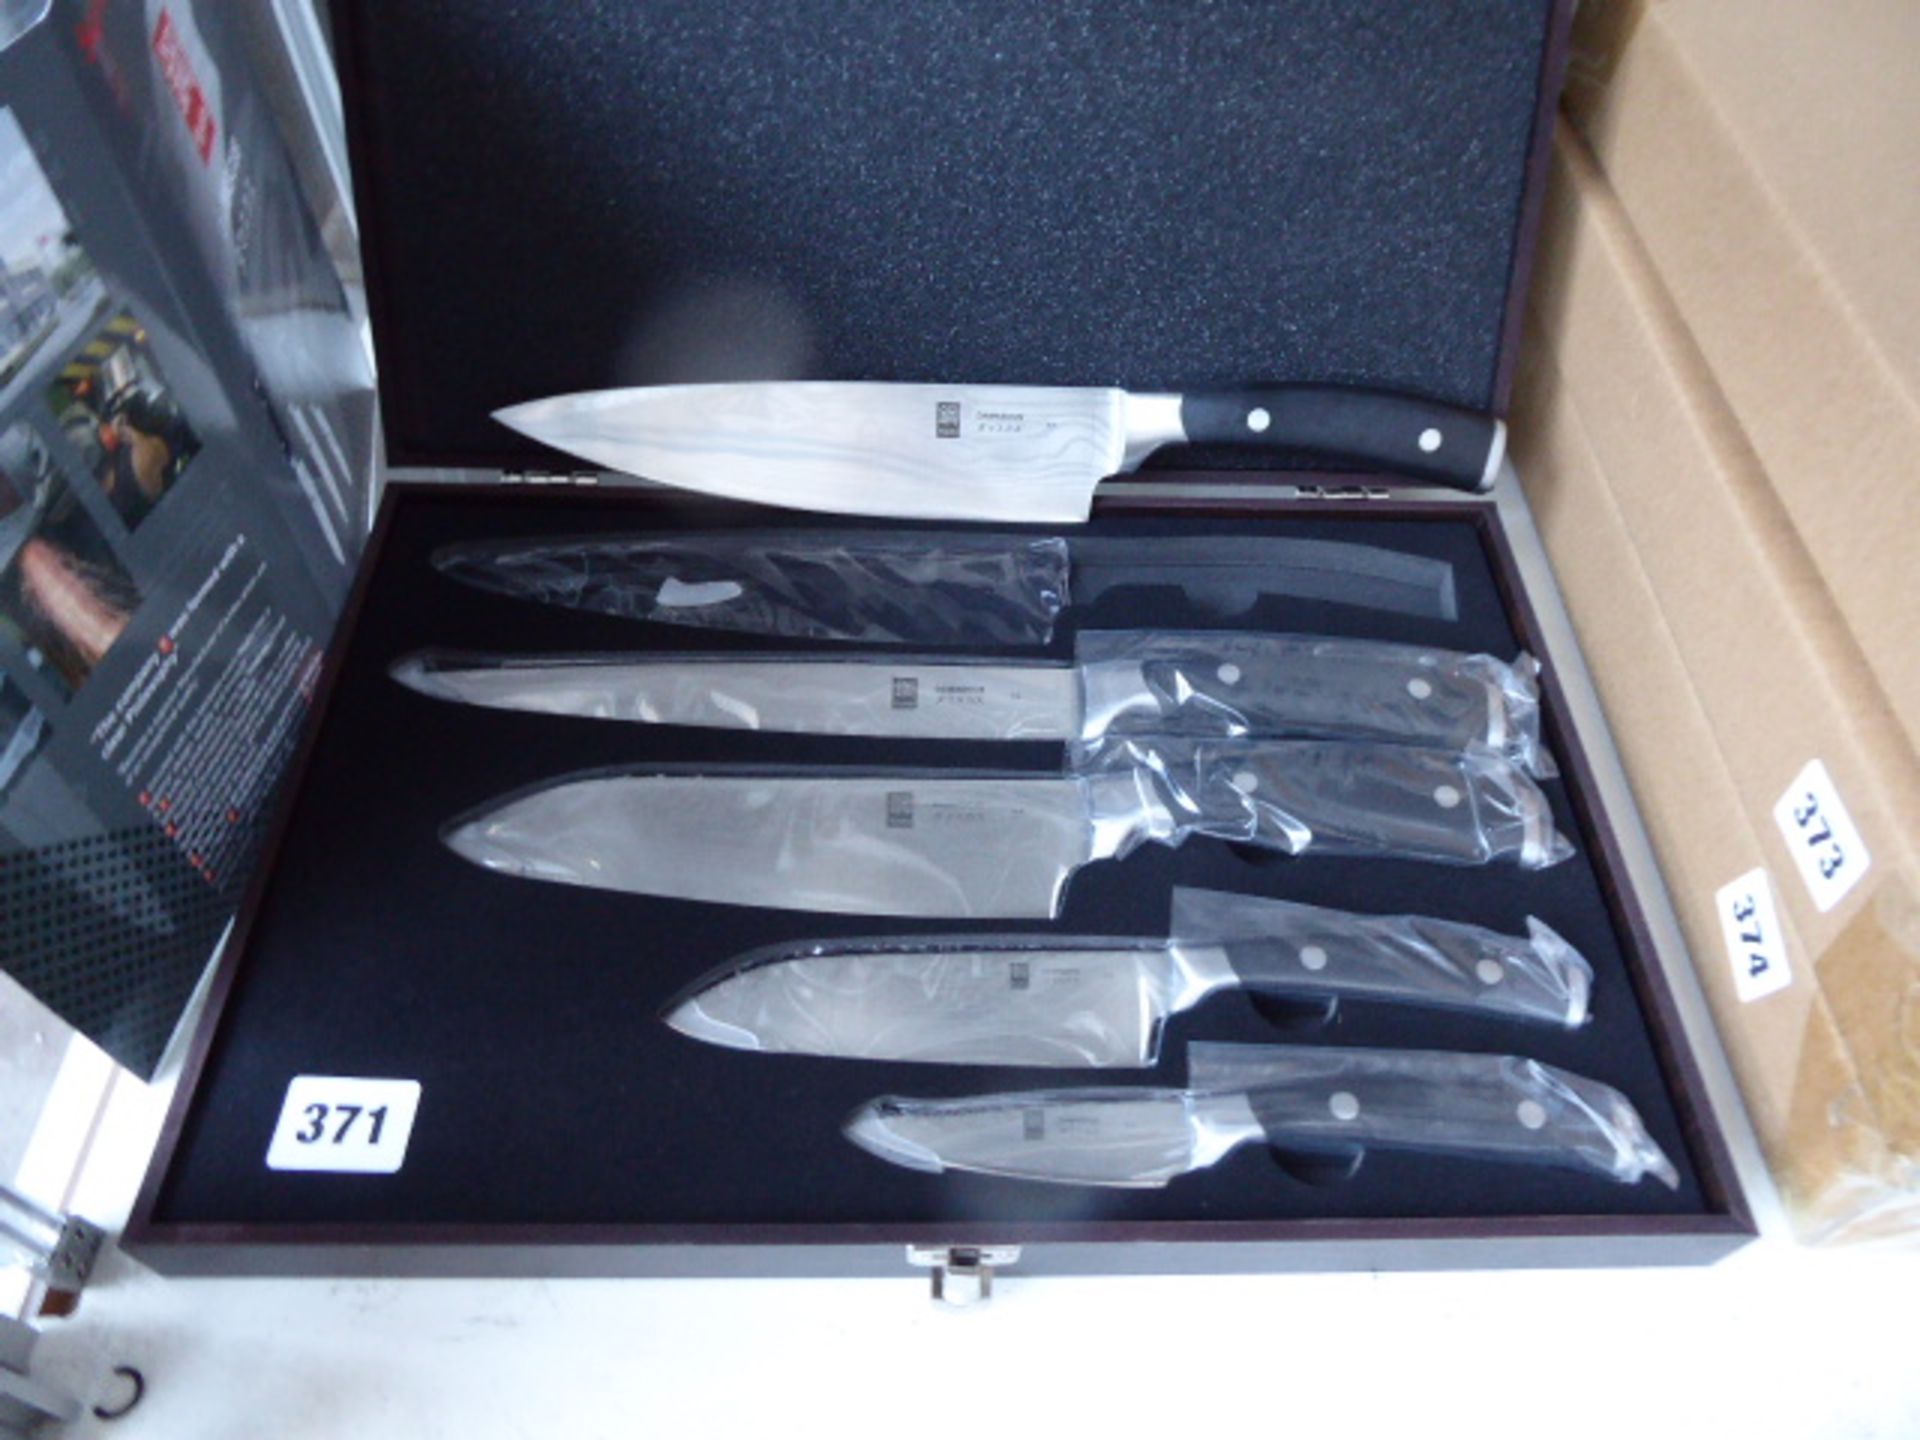 Kyoto Damascus 5 piece knife set in presentation box